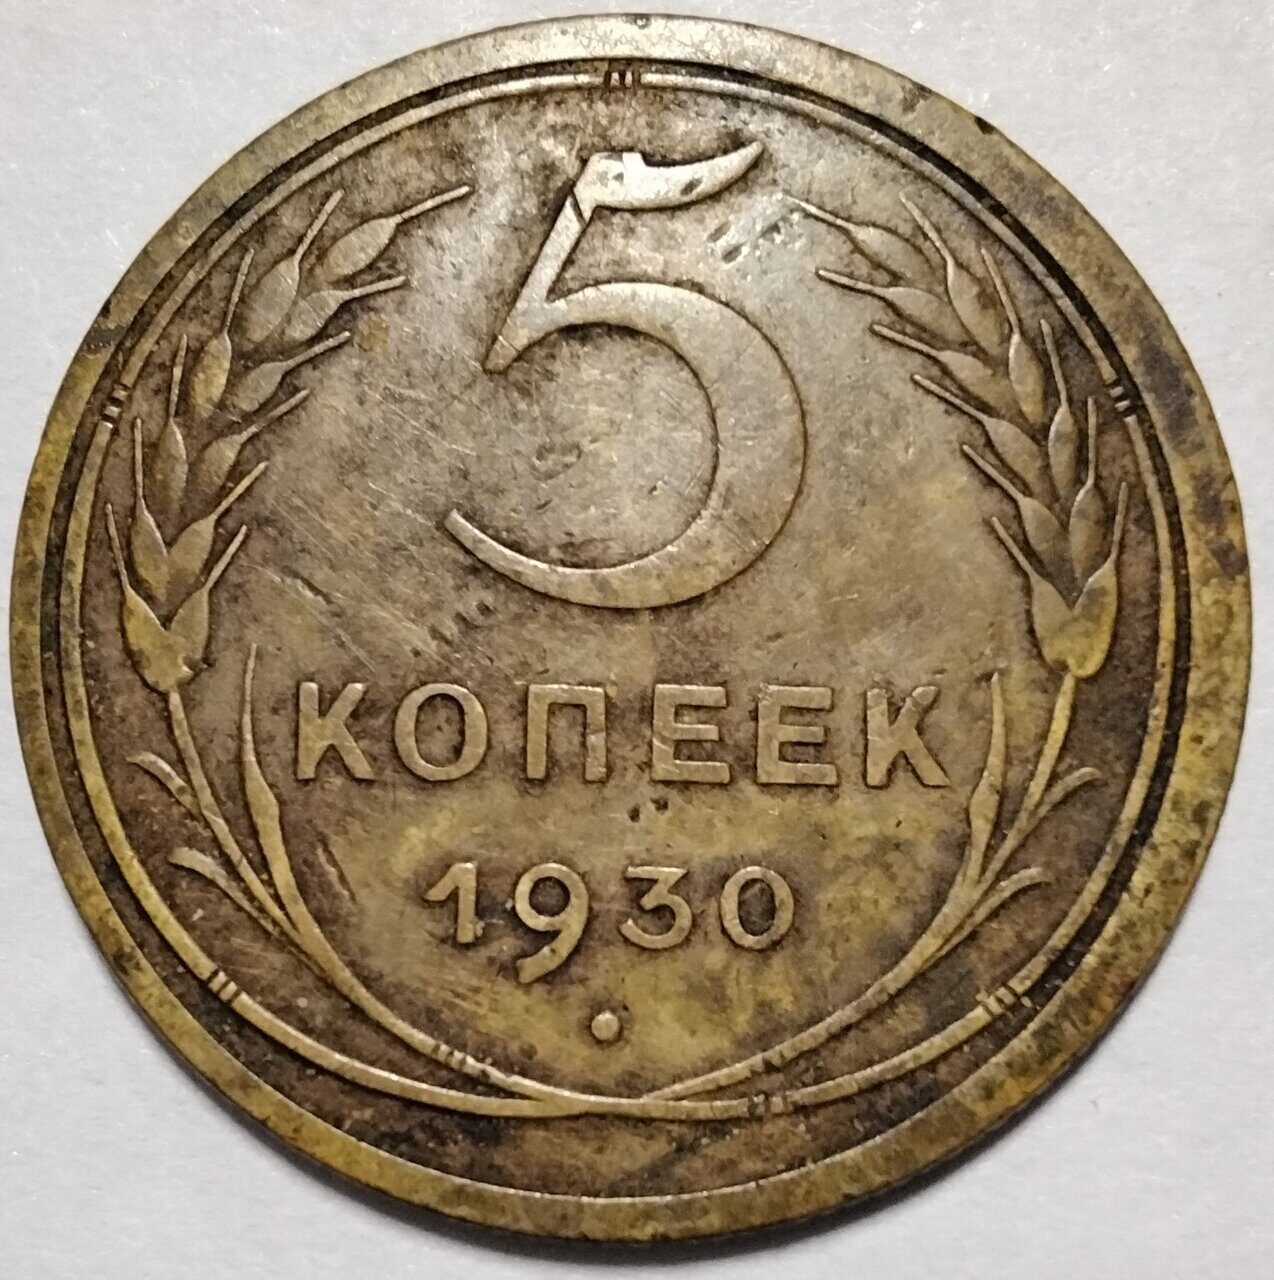 Монеты 1930 года 5 копеек. 5 Копеек 1958. 5 Копеек 1930. 5 Копеек СССР 1930. Монета СССР 5 копеек 1930.